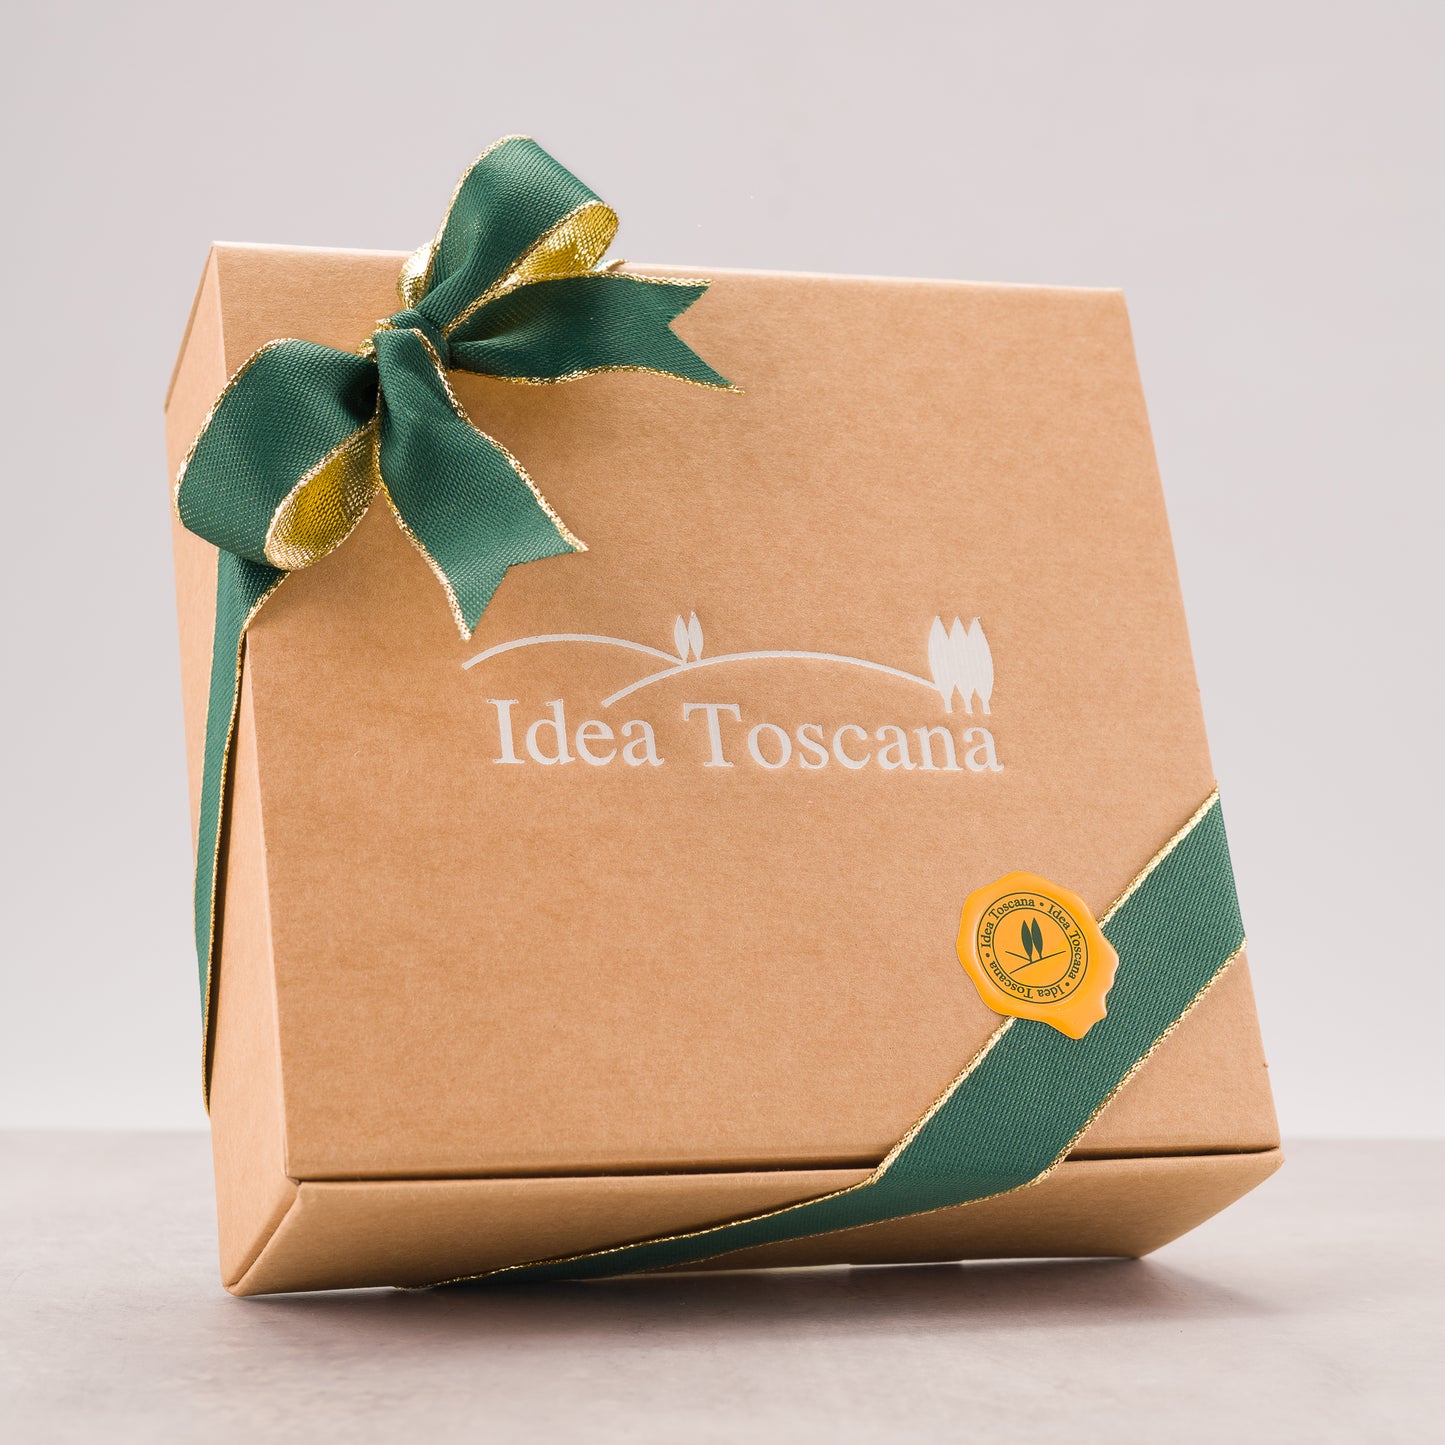 Bio regenerating face gift box - Idea Toscana